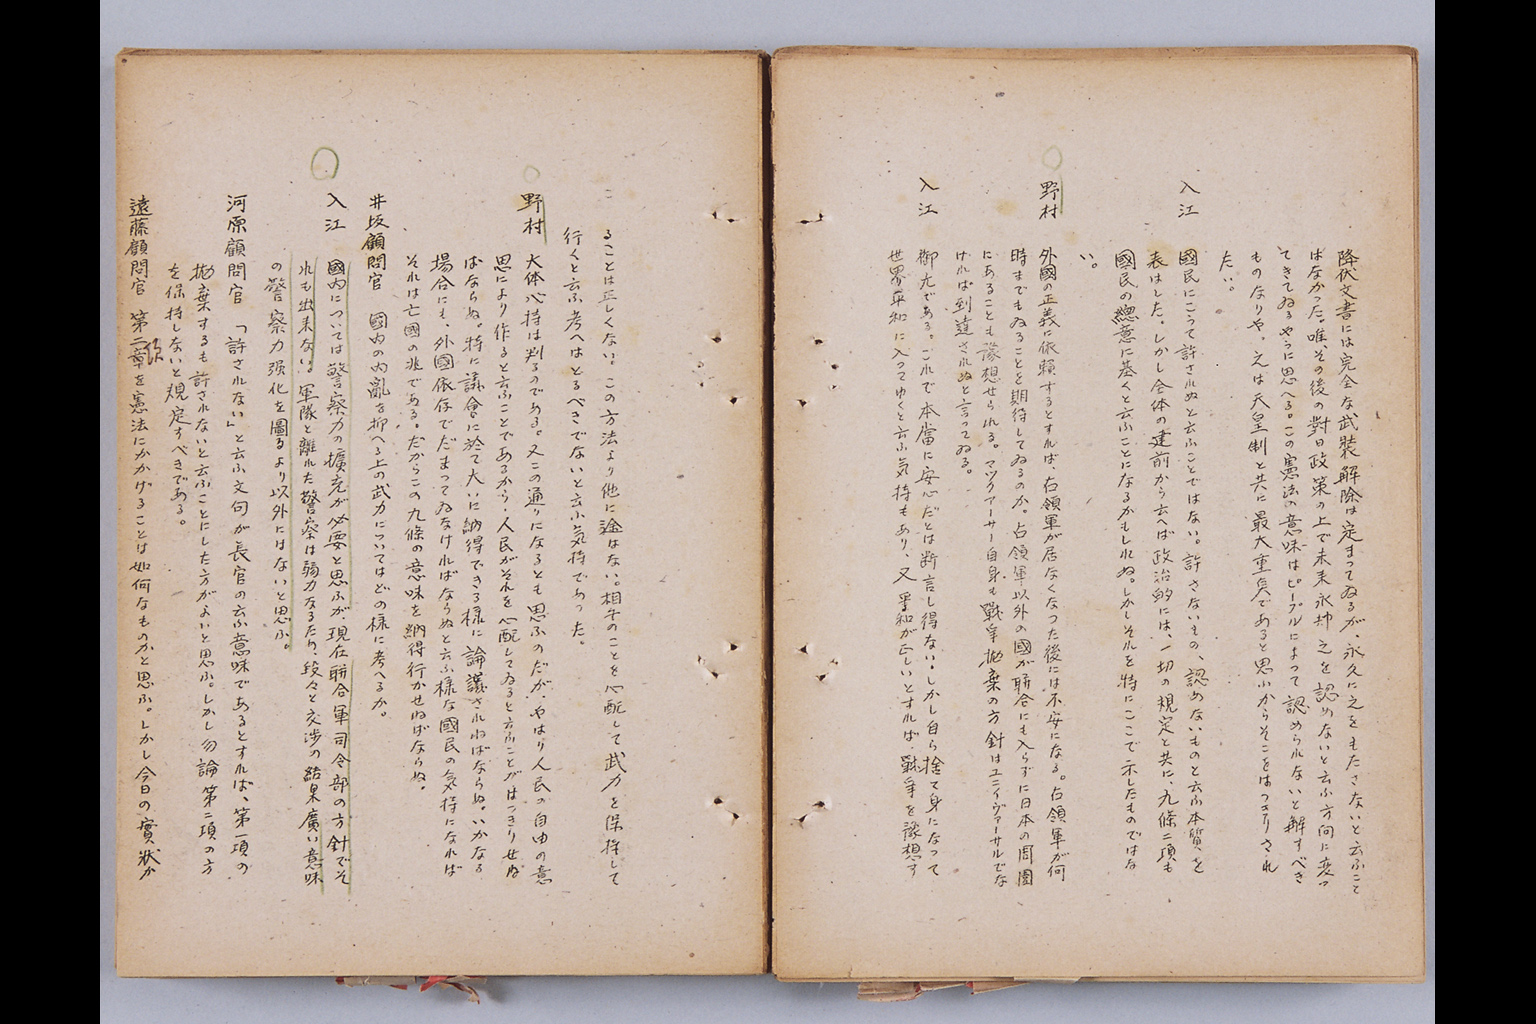 Sumitsuin Iinkai Kiroku(Larger image) | Birth of the Constitution